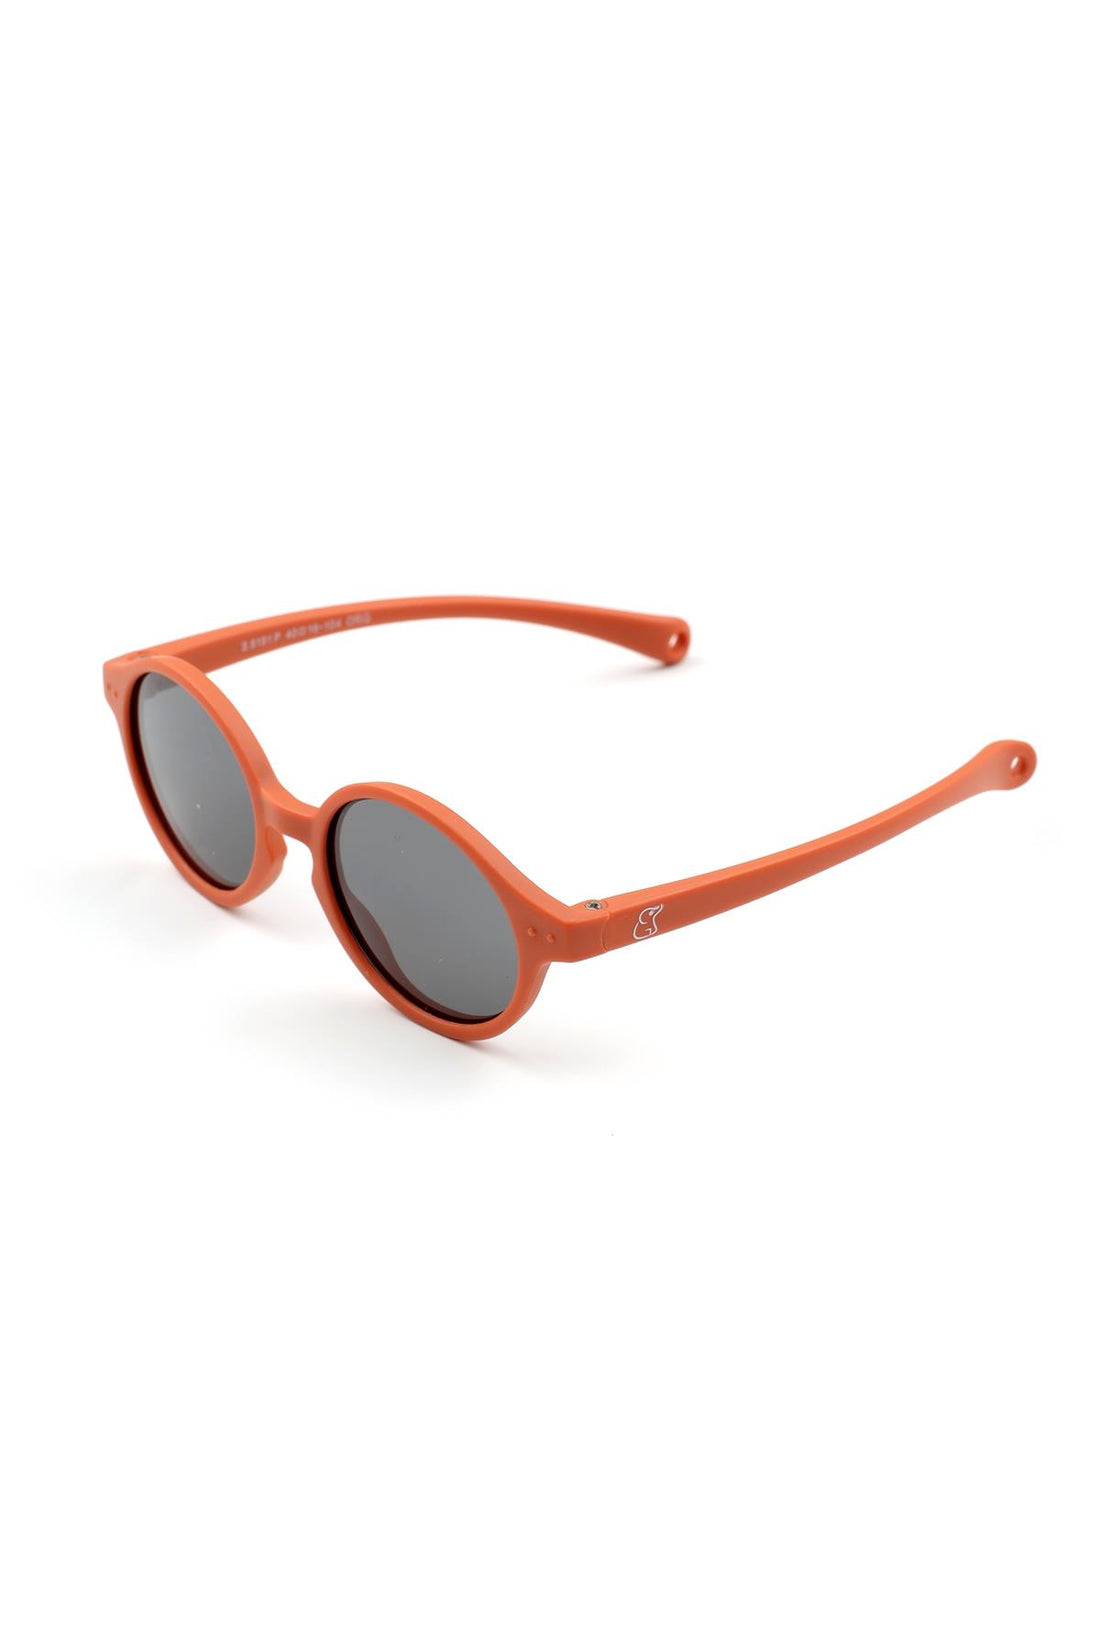 Ultra Light Mini Size Baby Sunglasses Orange